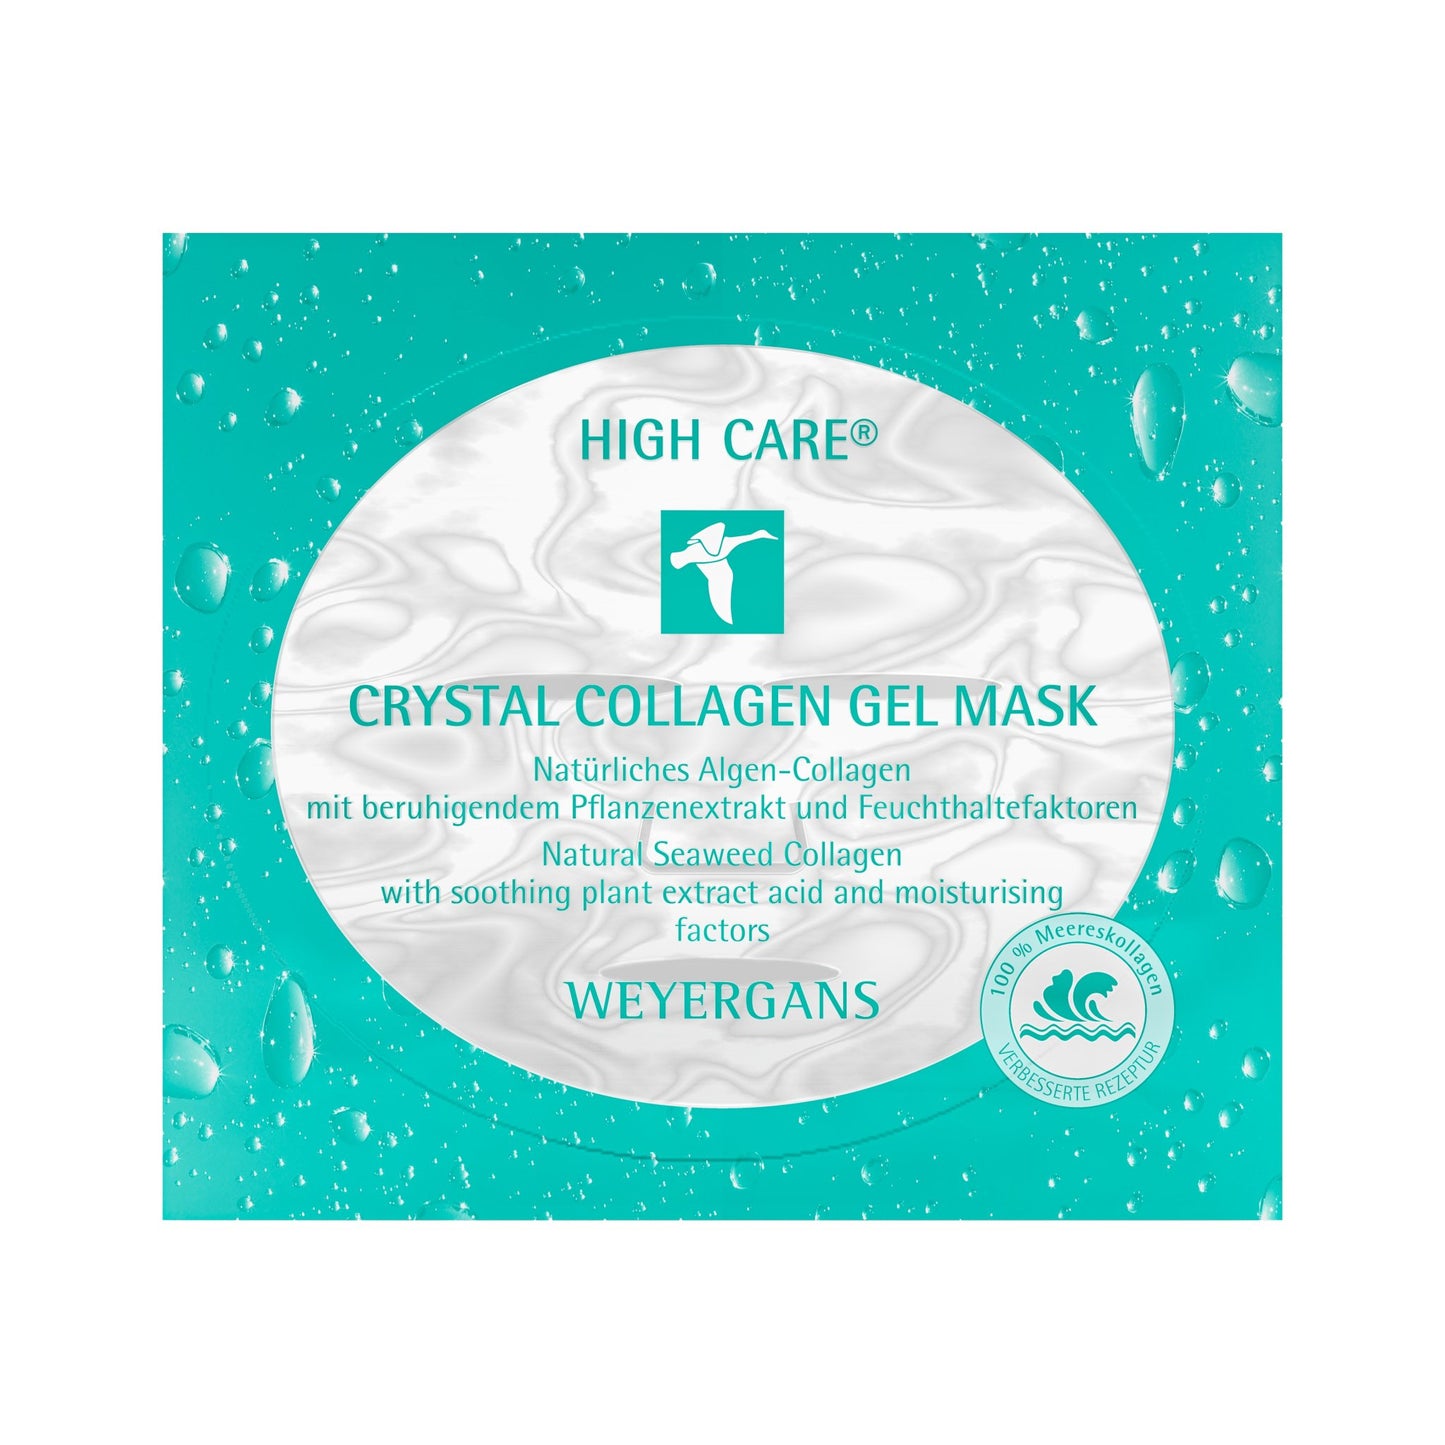 Crystal Collagen Gel Mask (1 Stk.) - Weyergans-Shop.de